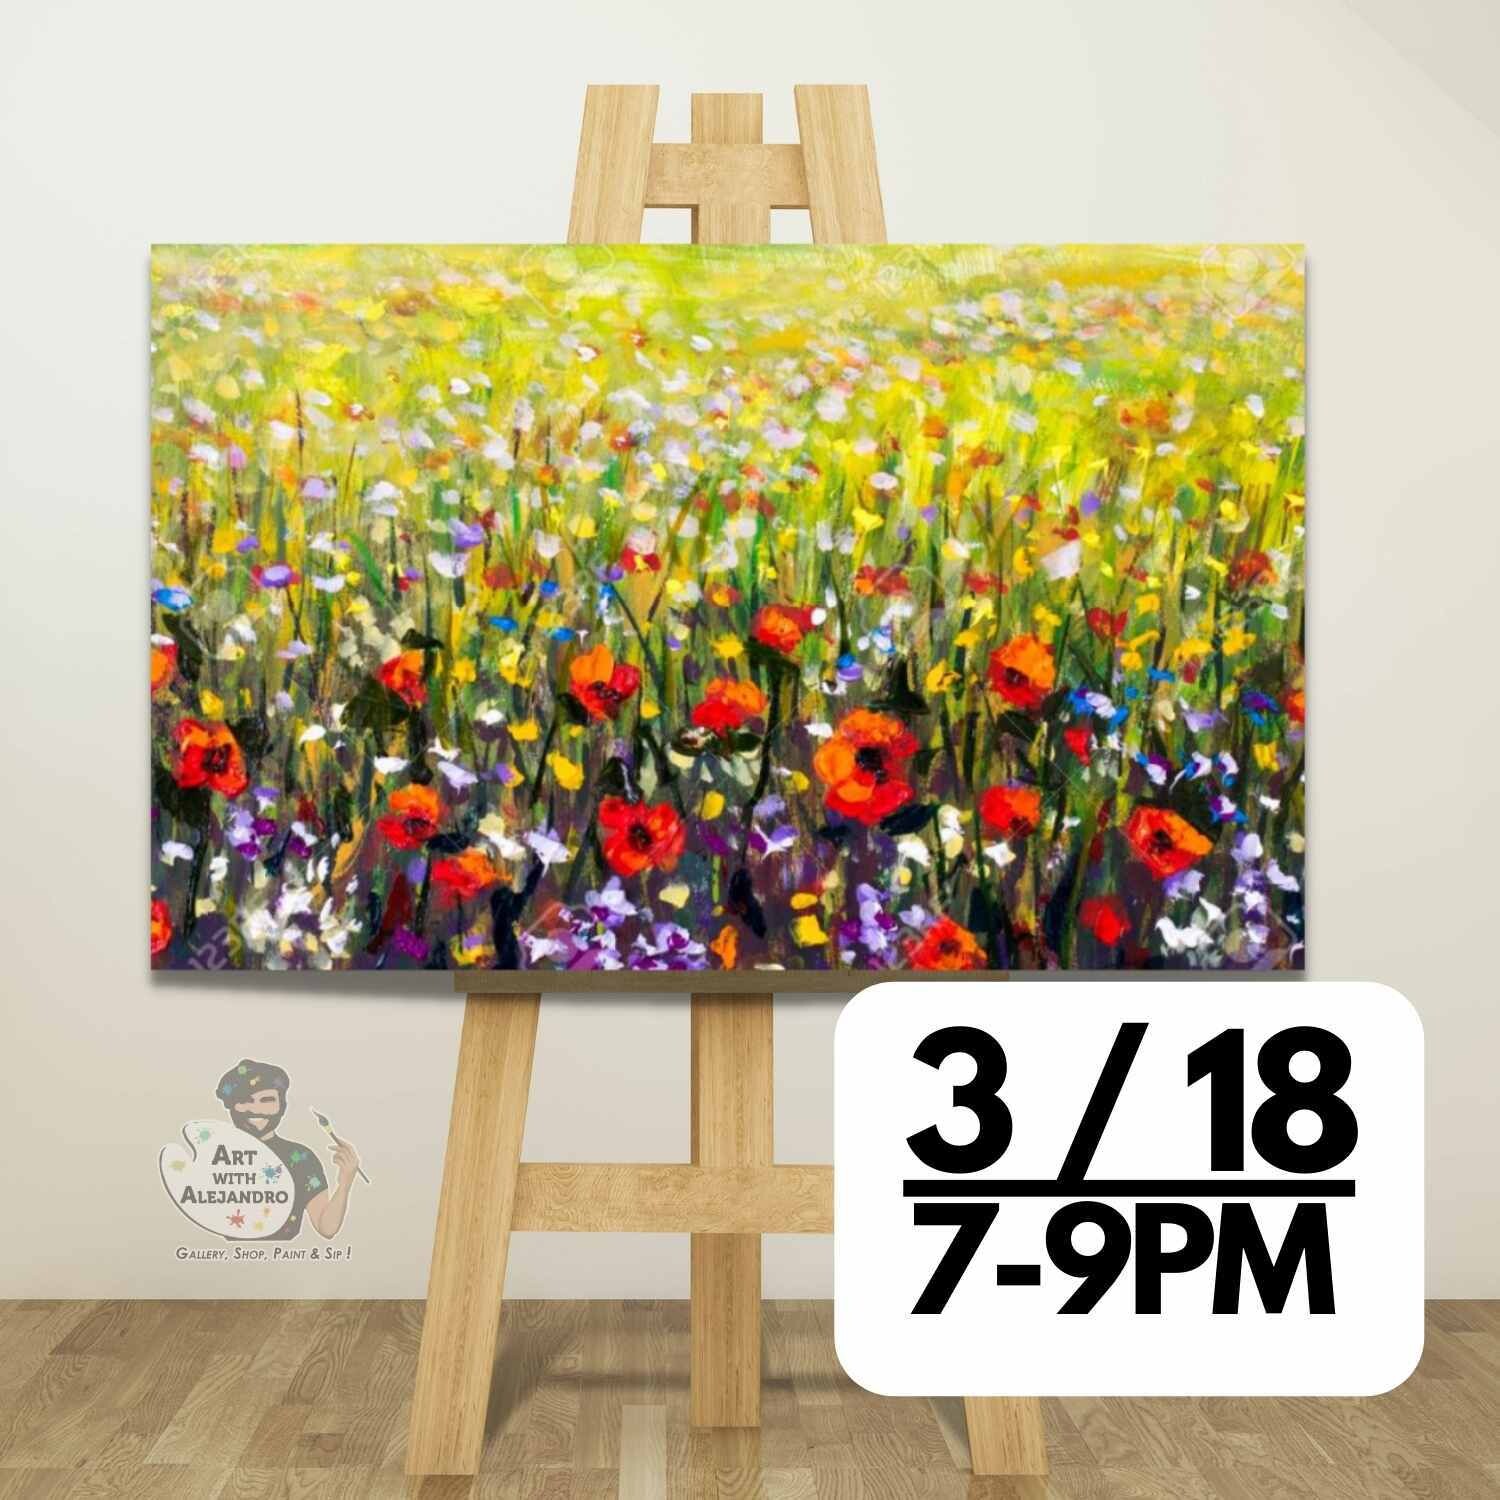 Monet Poppies Field -Sat Mar 18 @ 7:00-9:00 PM